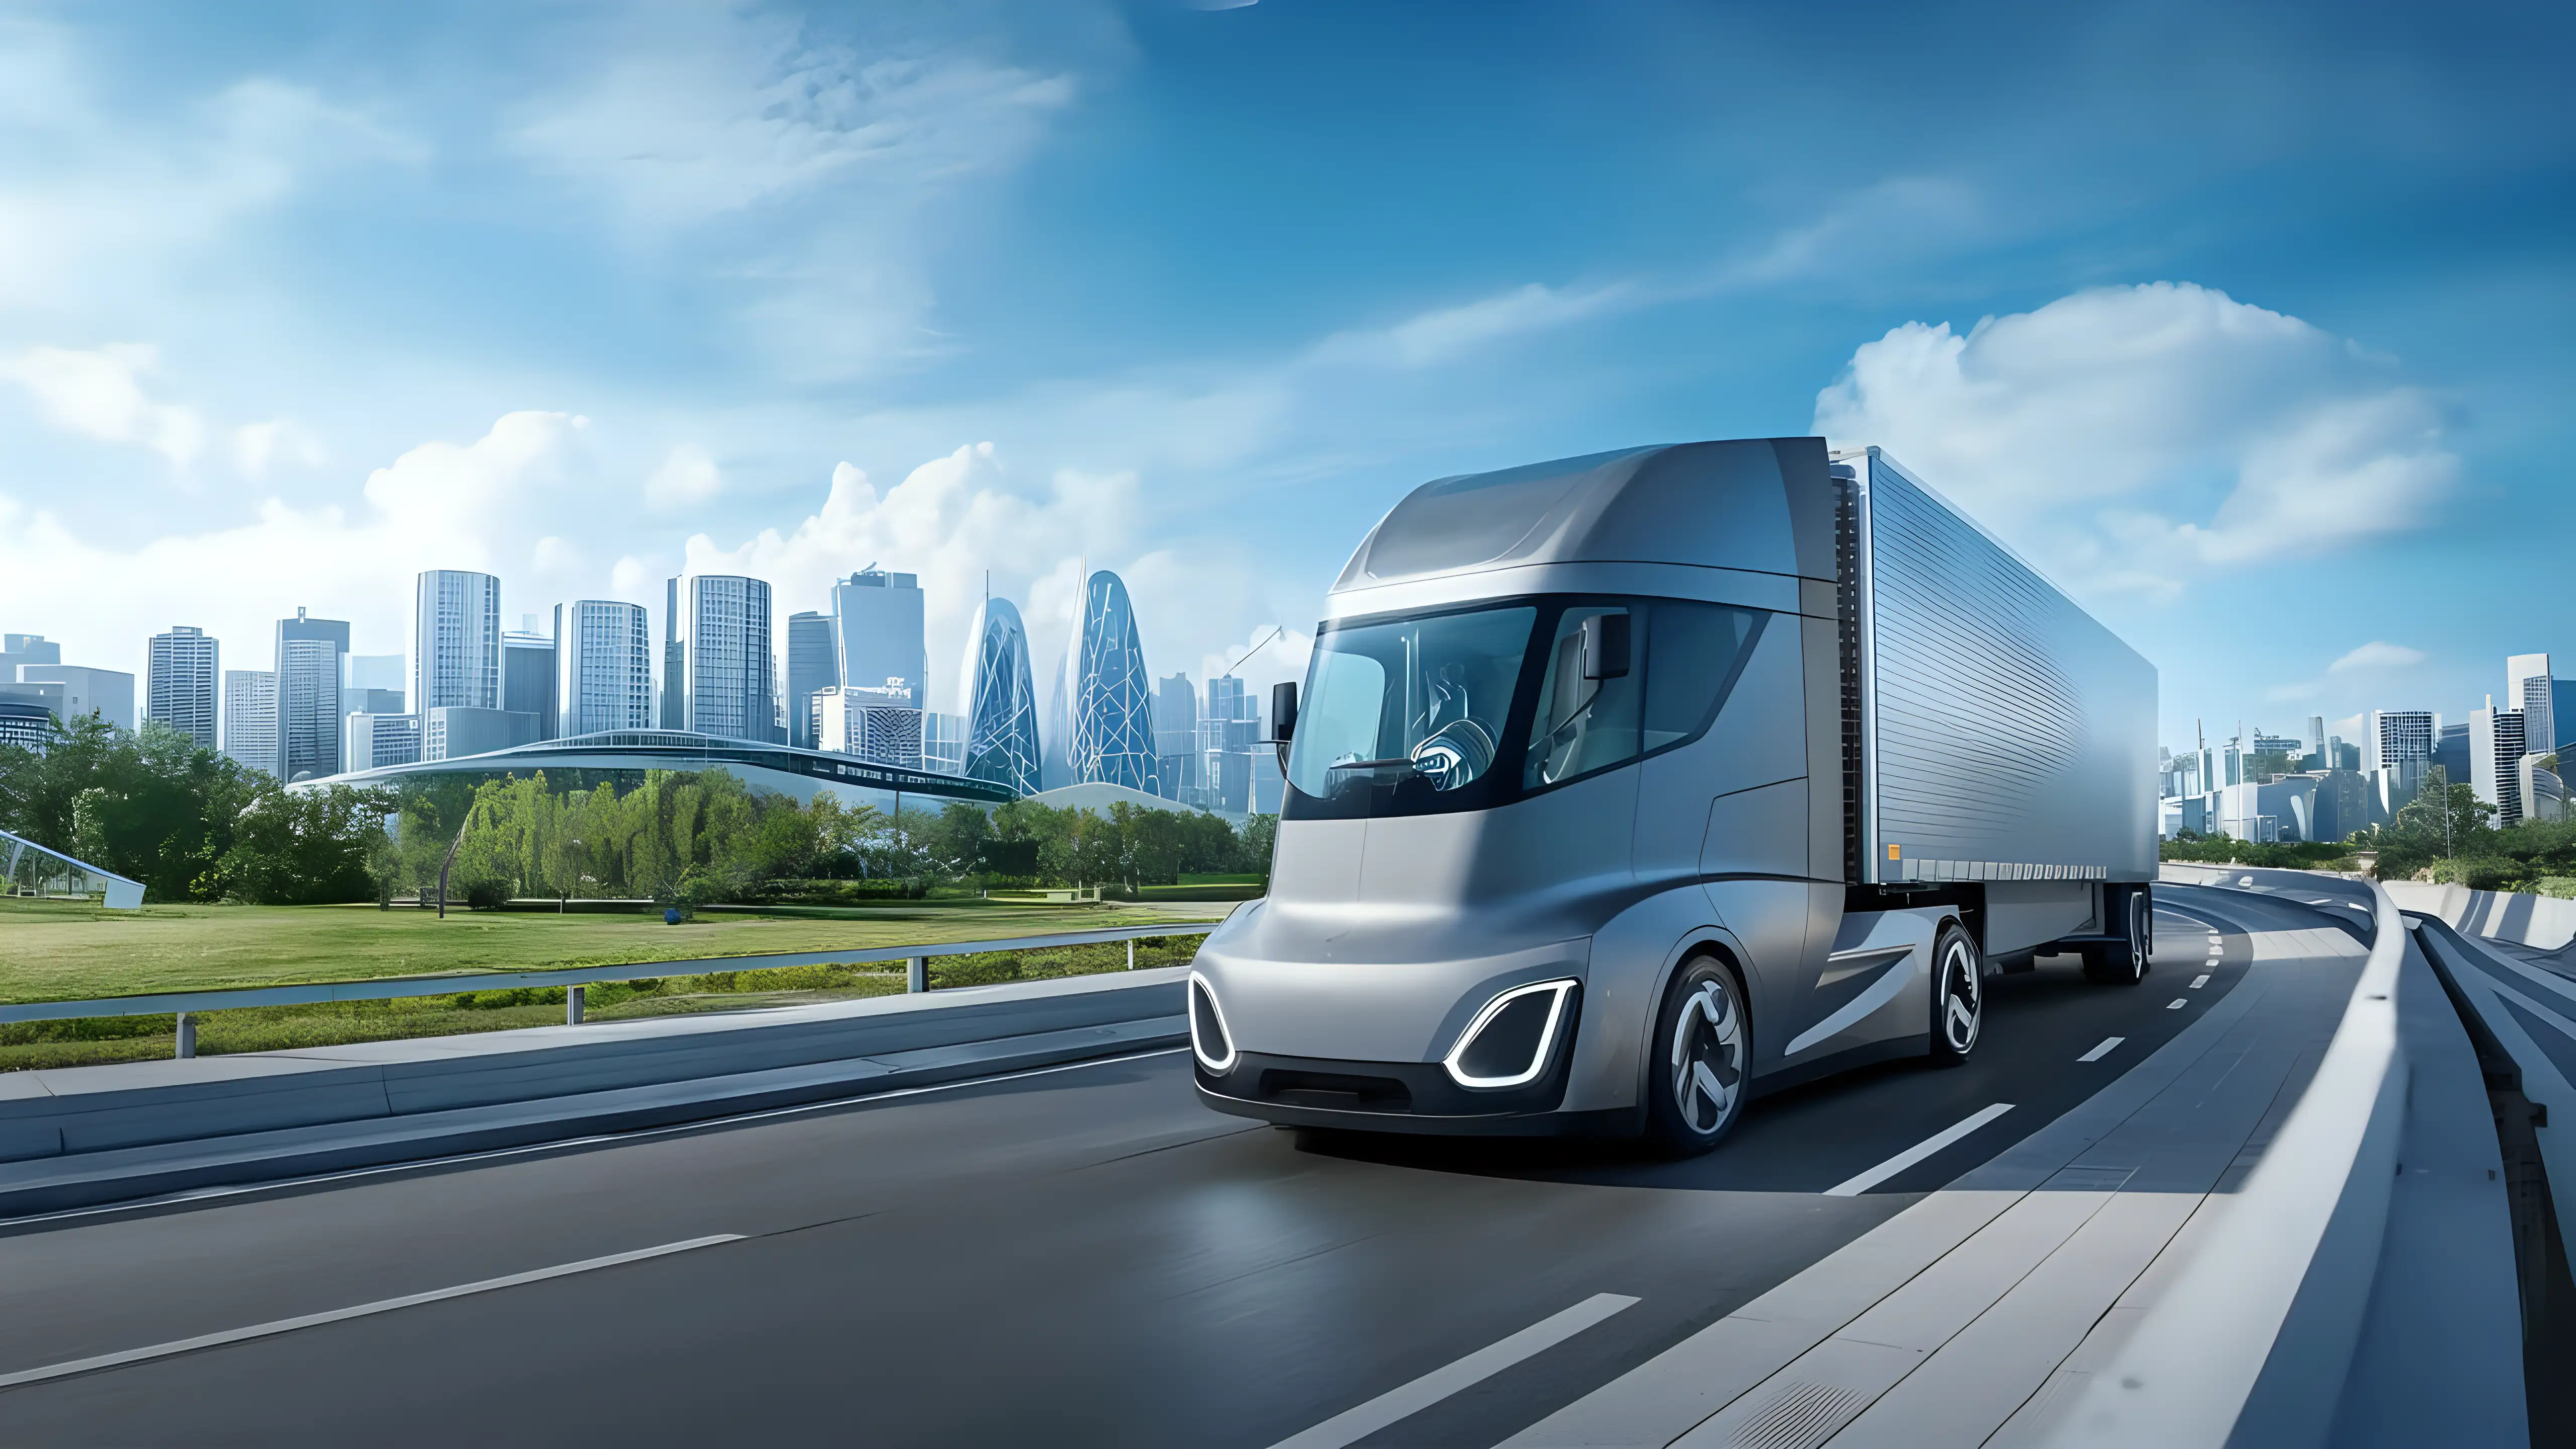 Futuristic electric autonomous truck on the modern city road